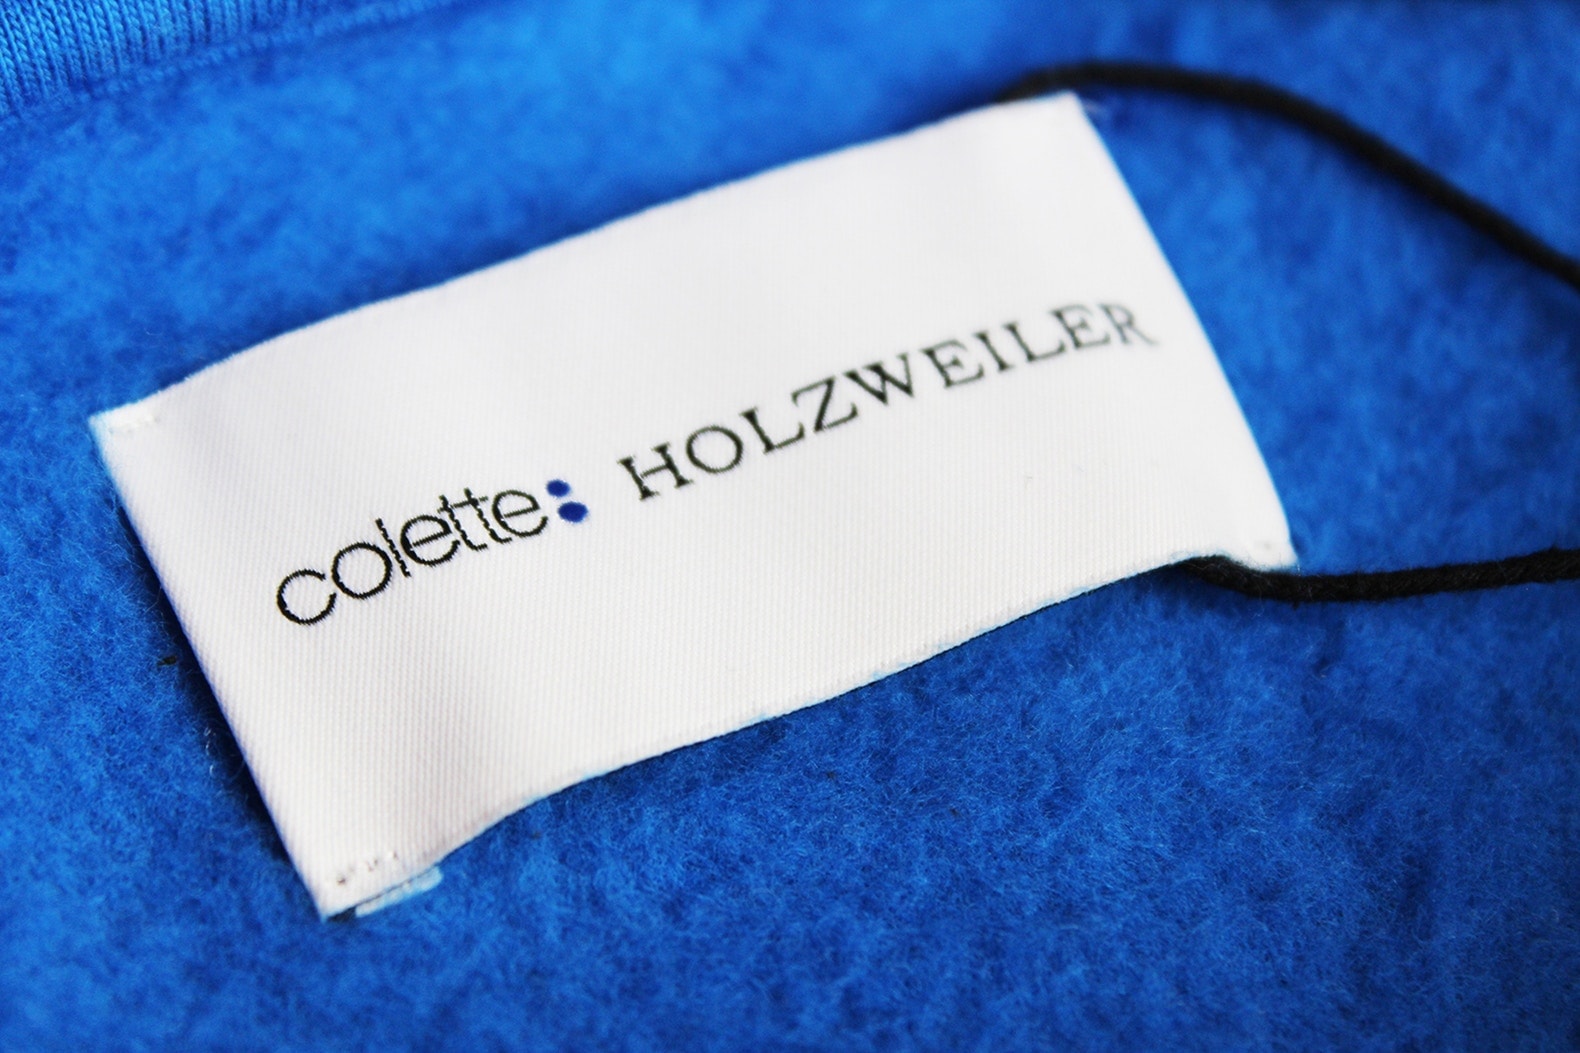 colette x Holzweiler 聯名「Hangon colette」連帽衫